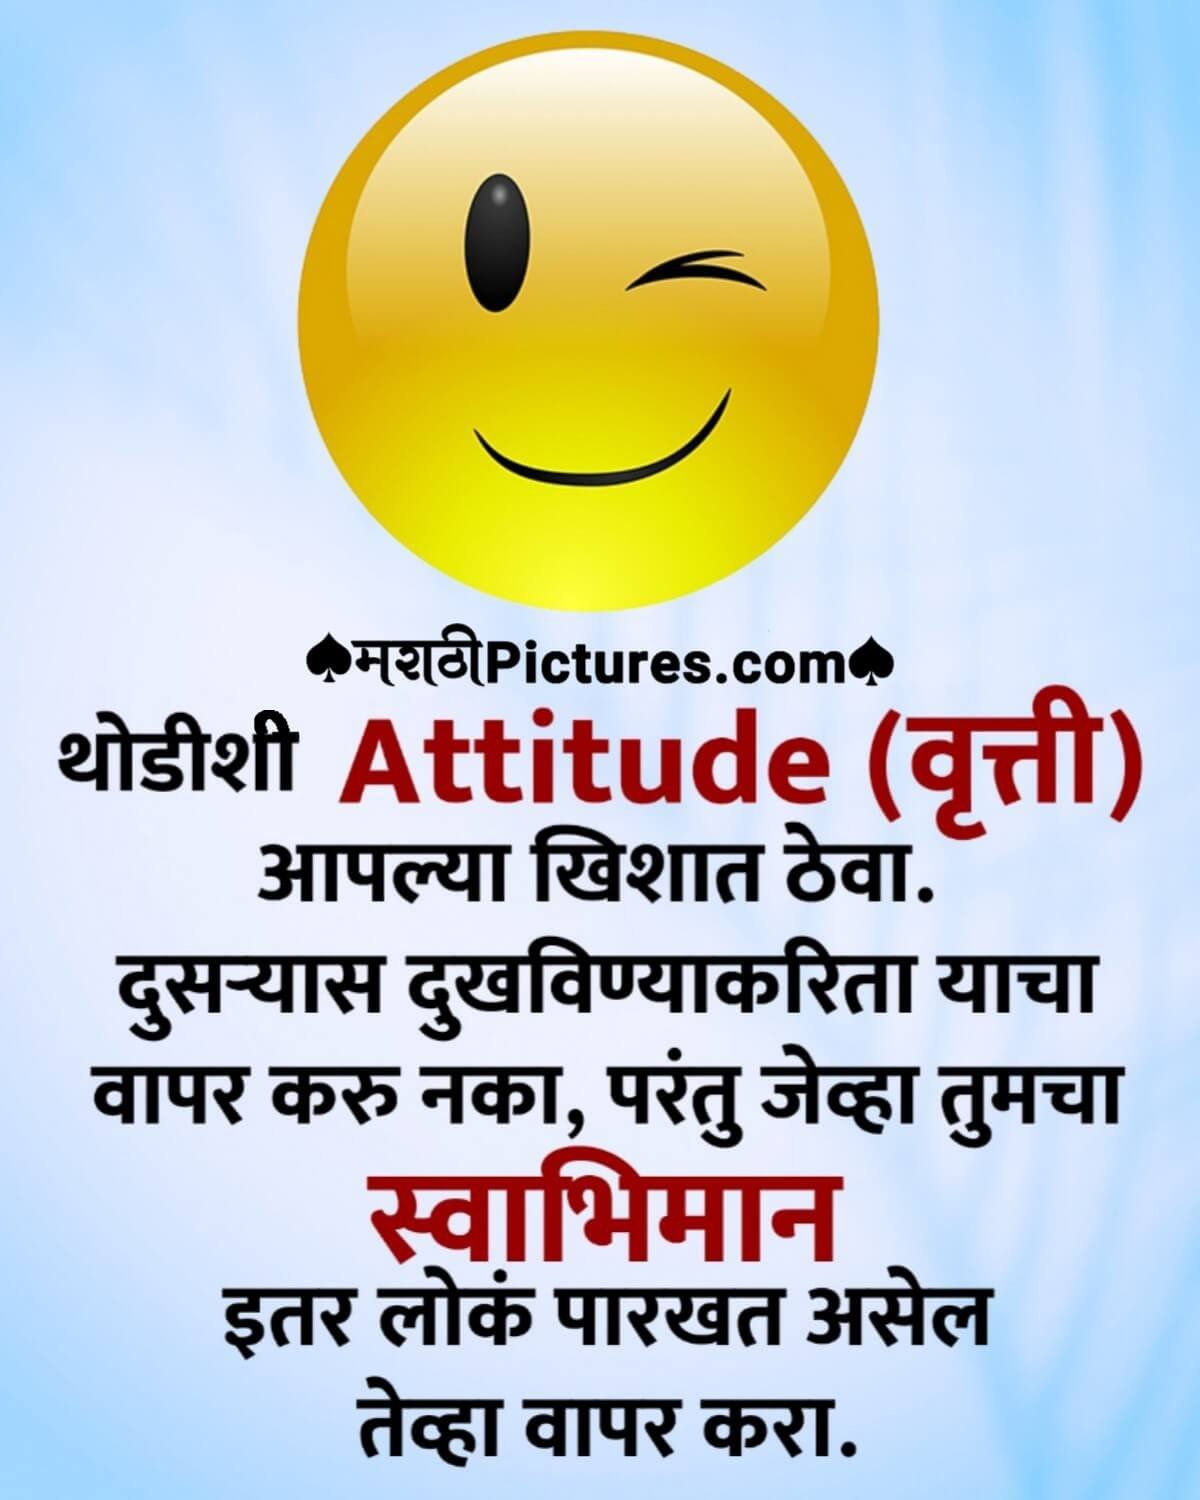 Thodishi Attitude Vruti Aaplya Khishat Theva